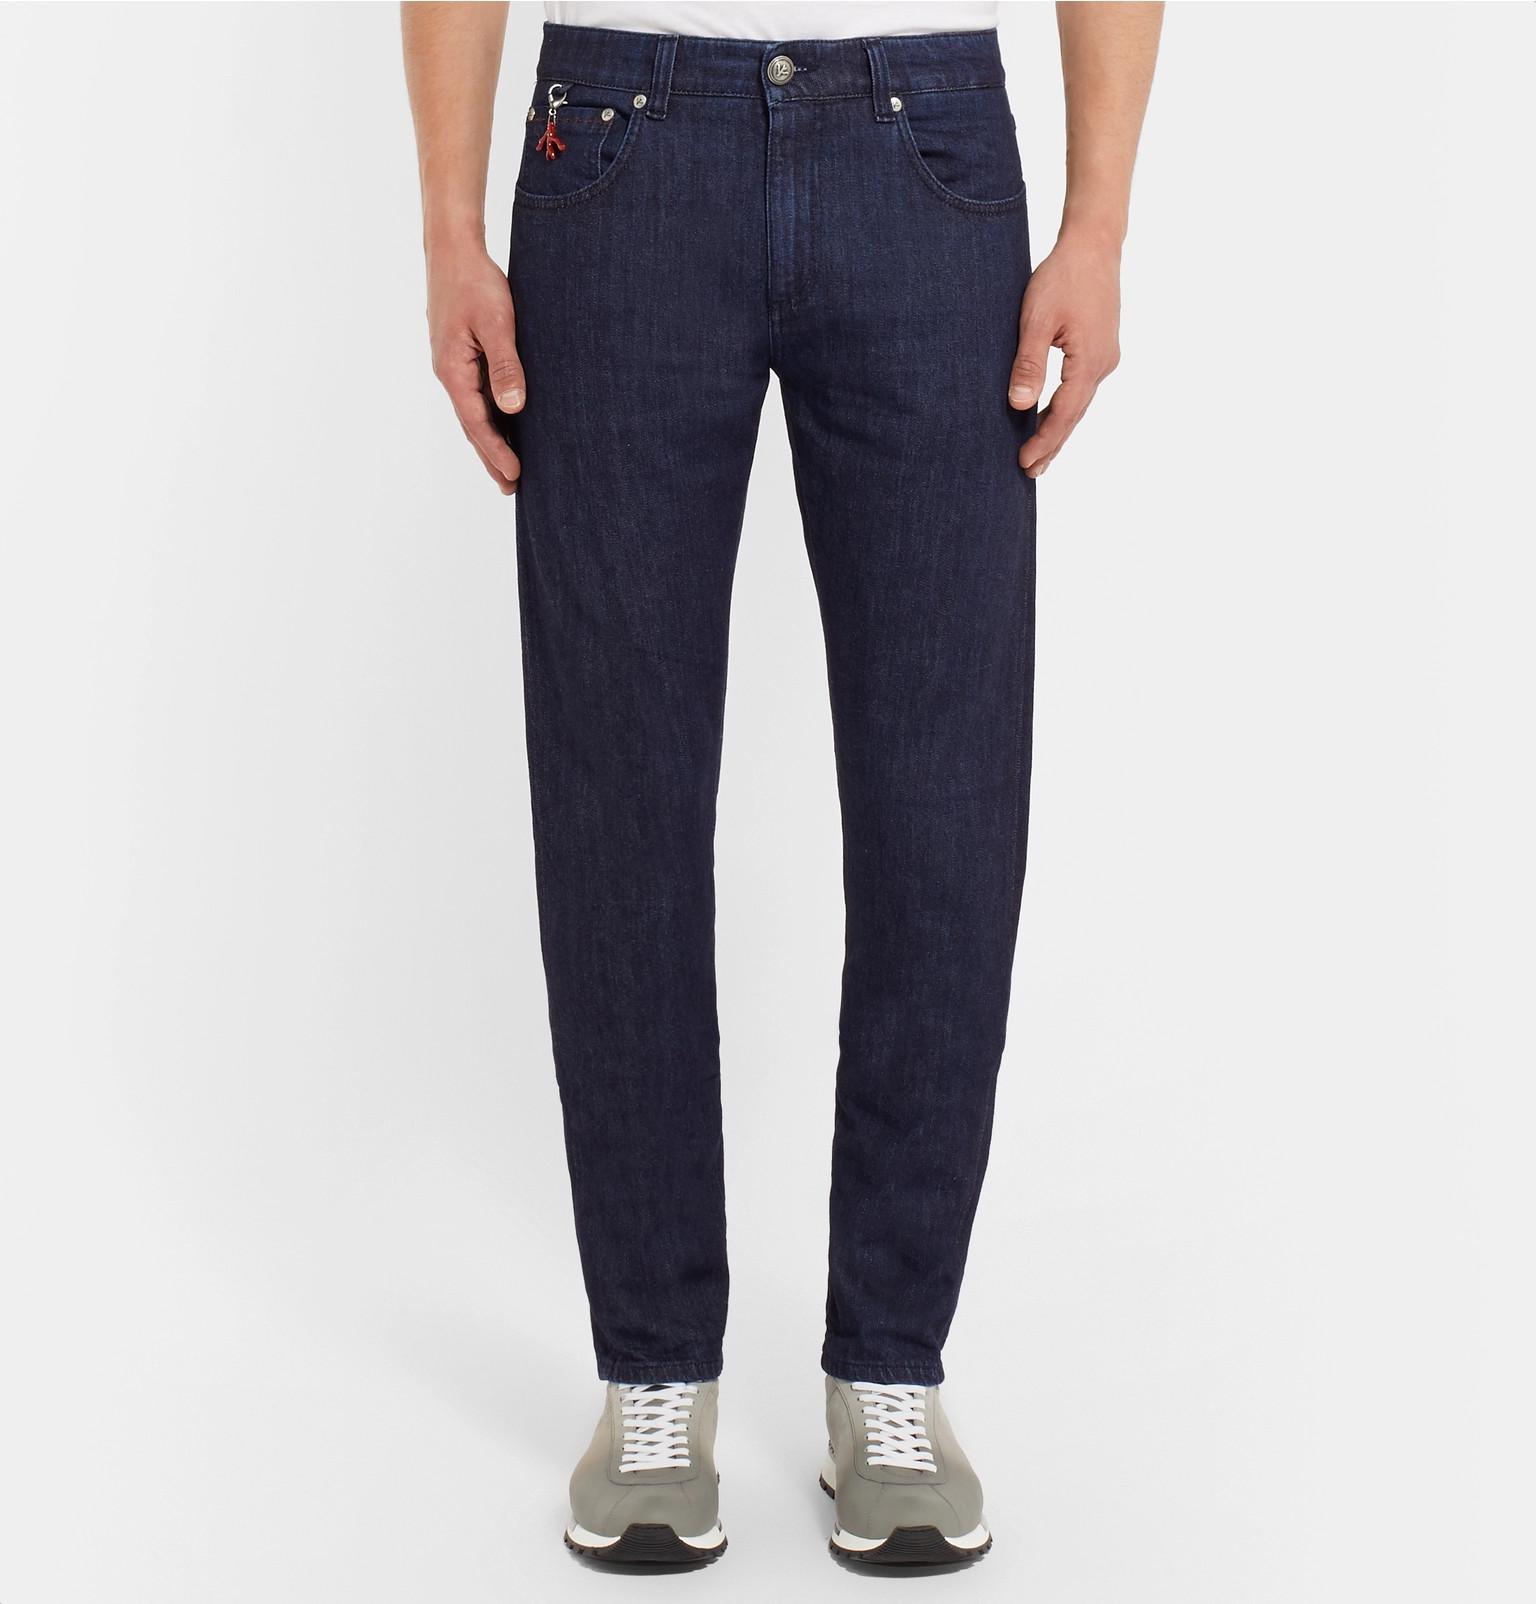 Isaia Slim-fit Stretch-denim Jeans in Indigo (Blue) for Men - Lyst